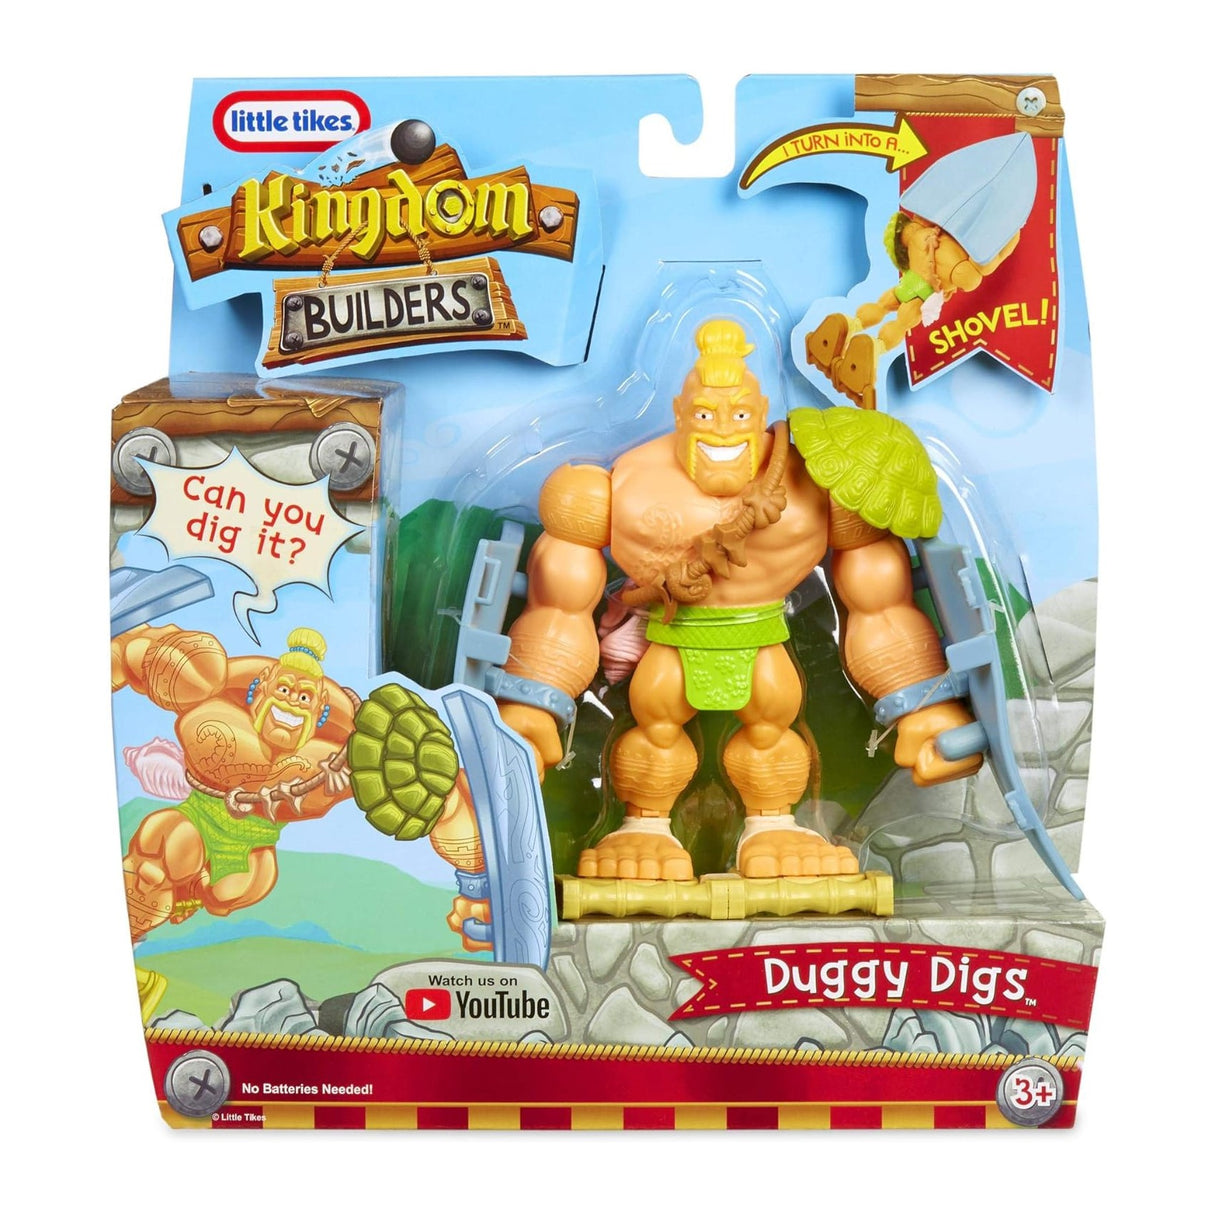 Little Tikes - Kingdom Builders - Duggy Digs - Legetøjsfigur